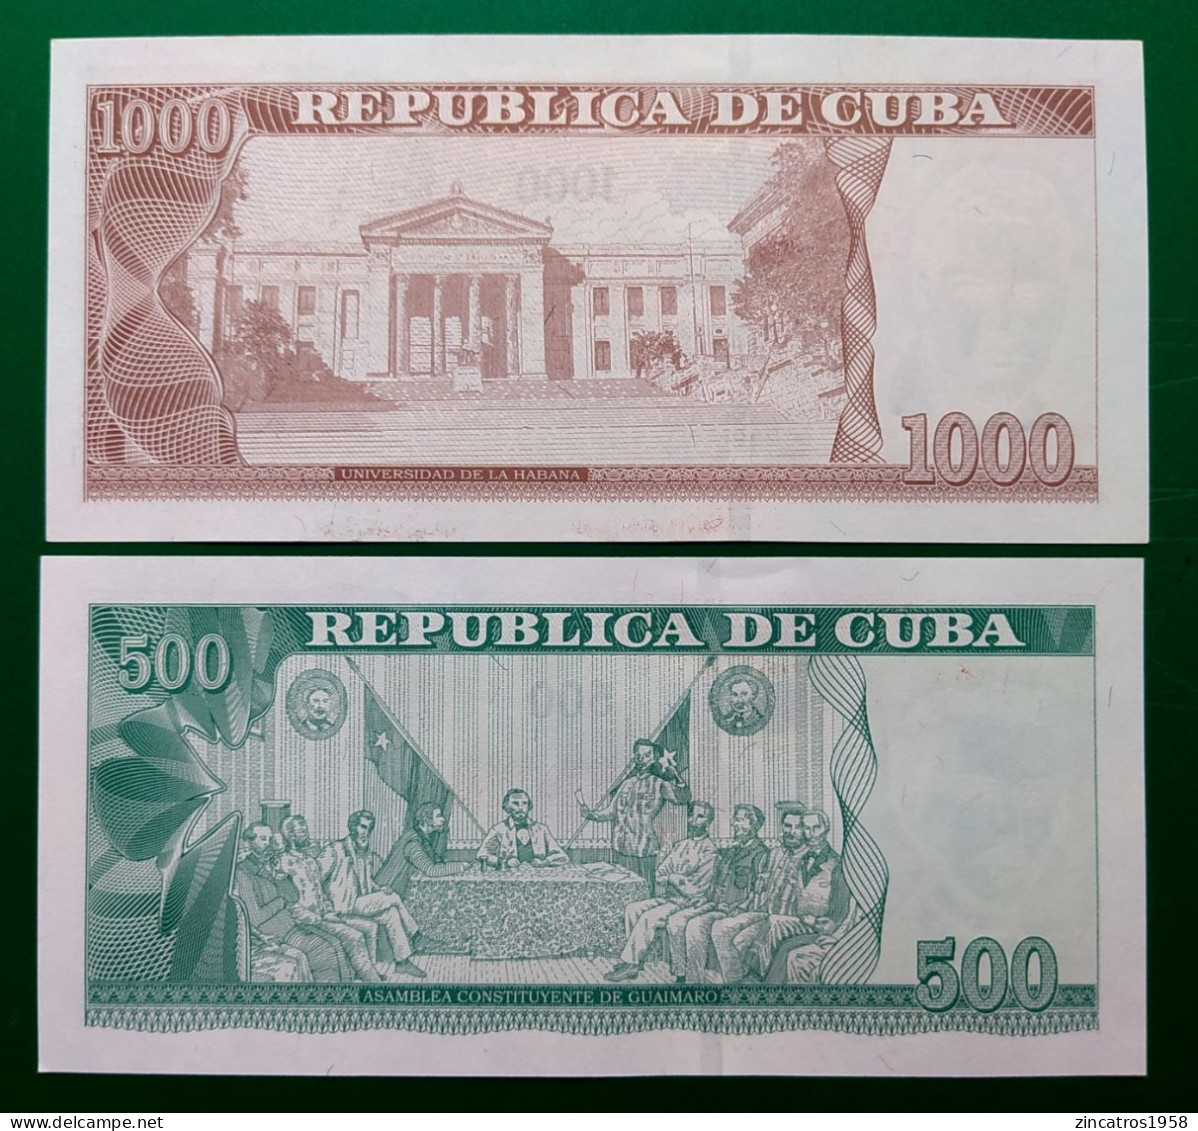 Cuba / 500 Pesos 2022 Ignacio Agramonte UNC P. 131 + 1000 Pesos 2021 Julio Antonio Mella UNC P. 132 CUP ++ Lower Price + - Kuba